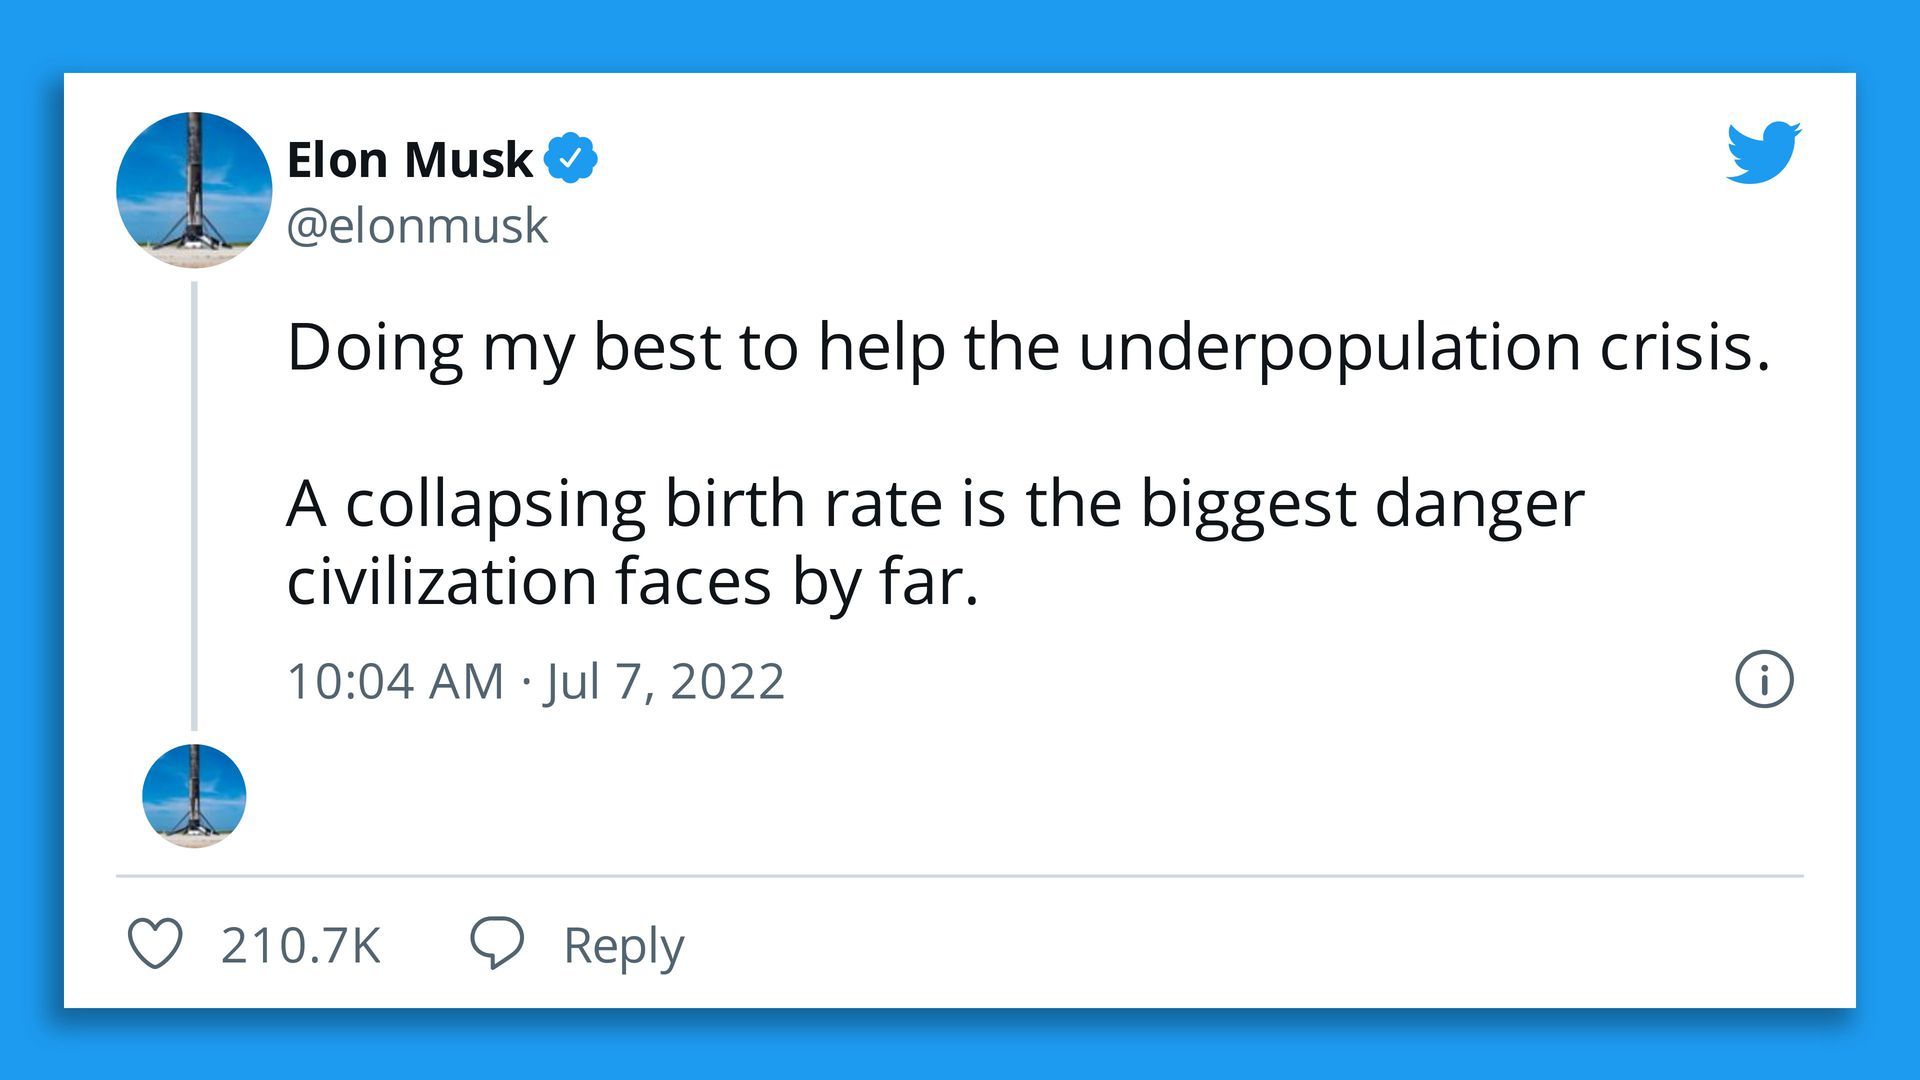 Elon Musk tweet saying "Doing my best to help the underpopulation crisis."